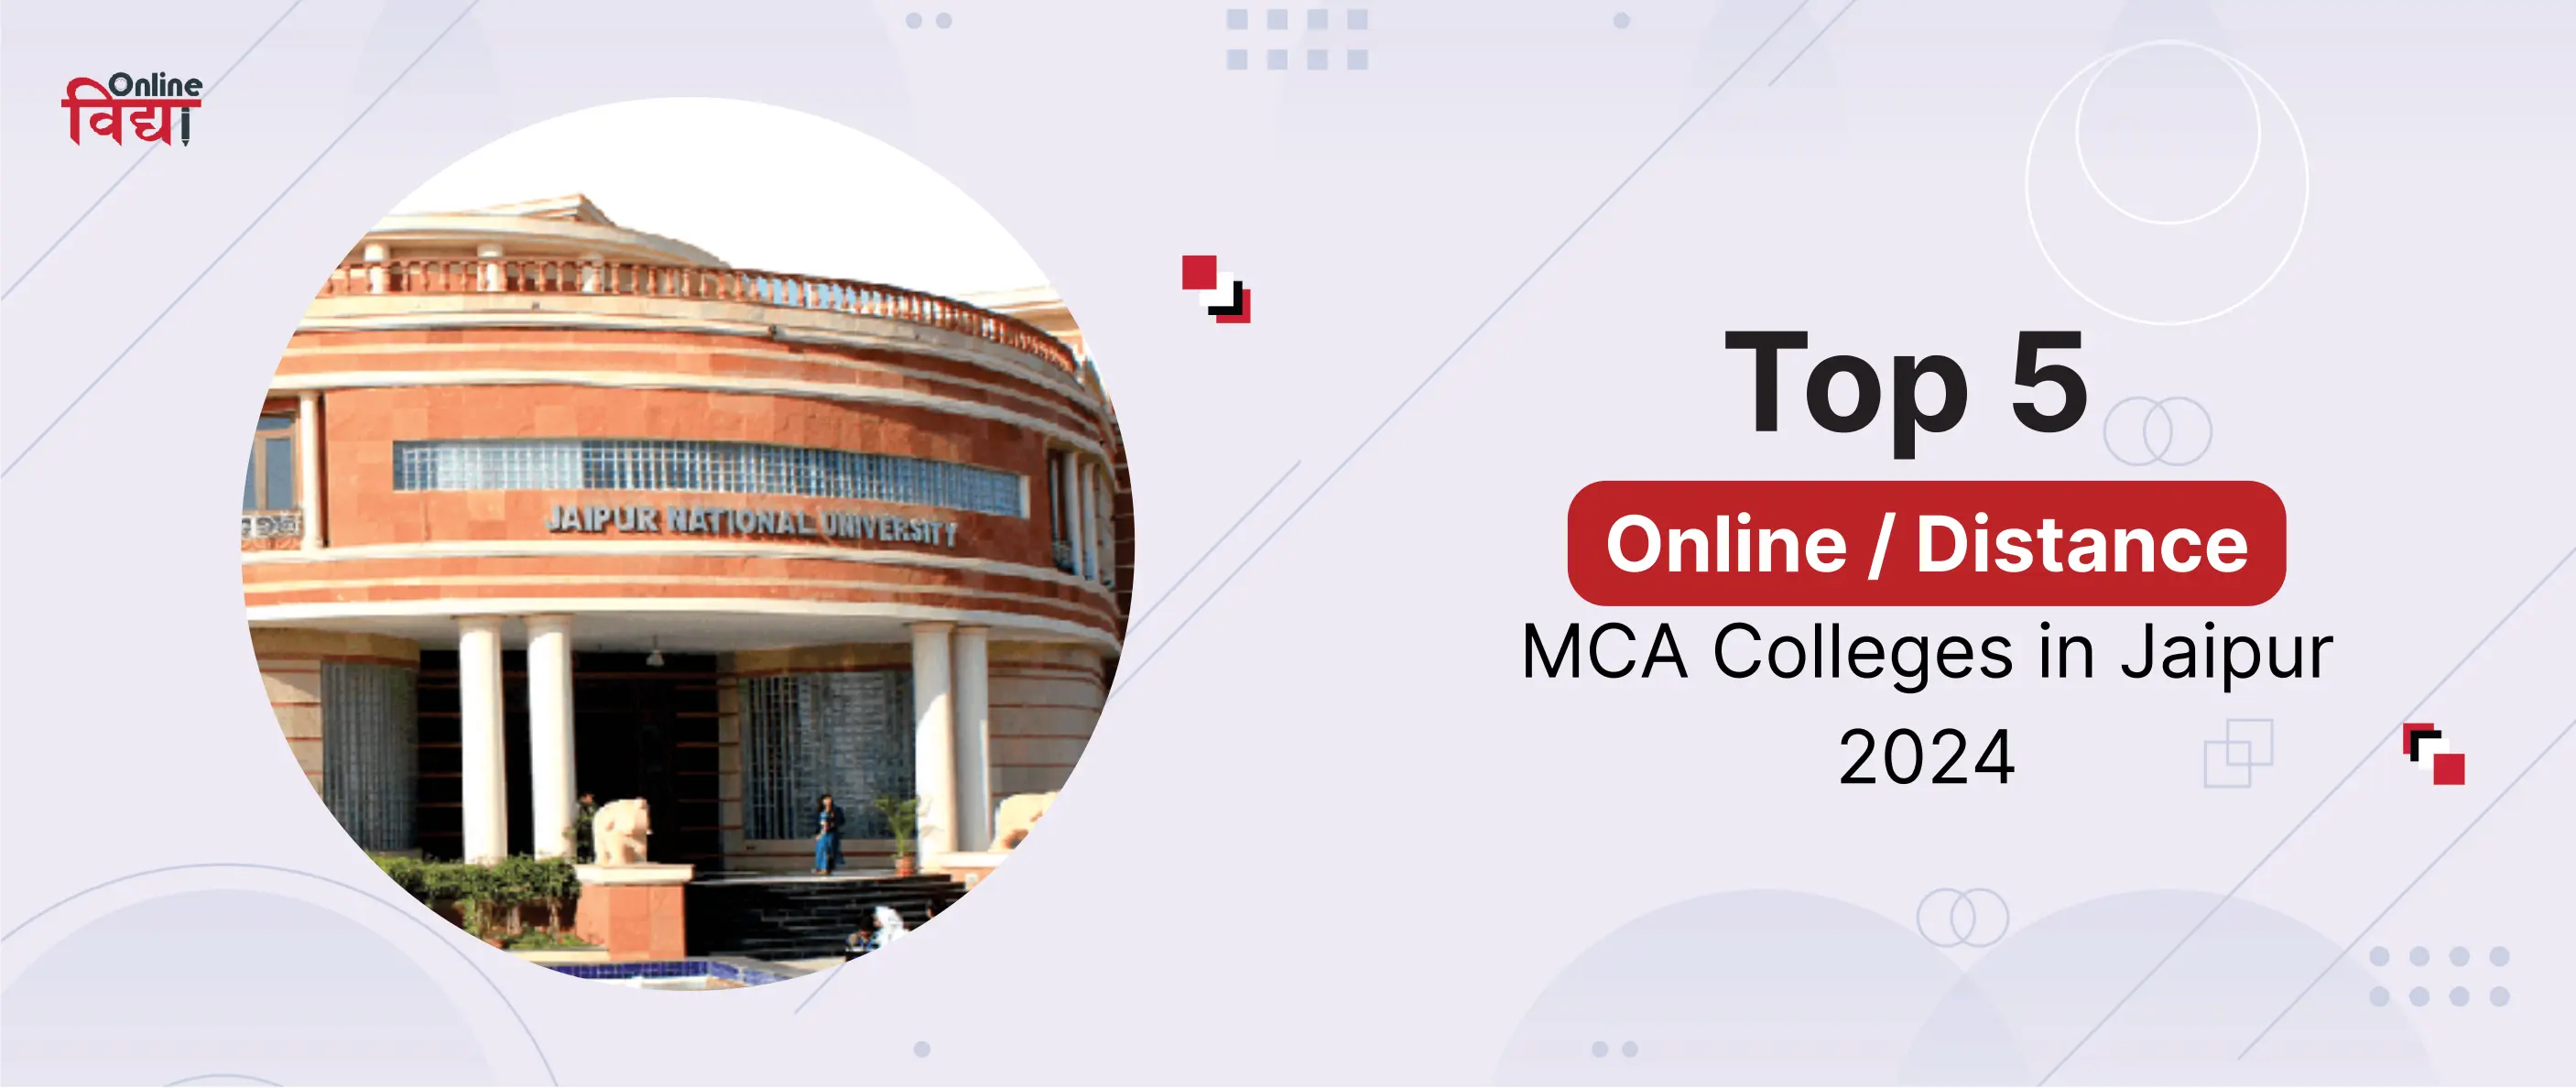 Top 5 Online/Distance MCA Colleges in Jaipur 2024